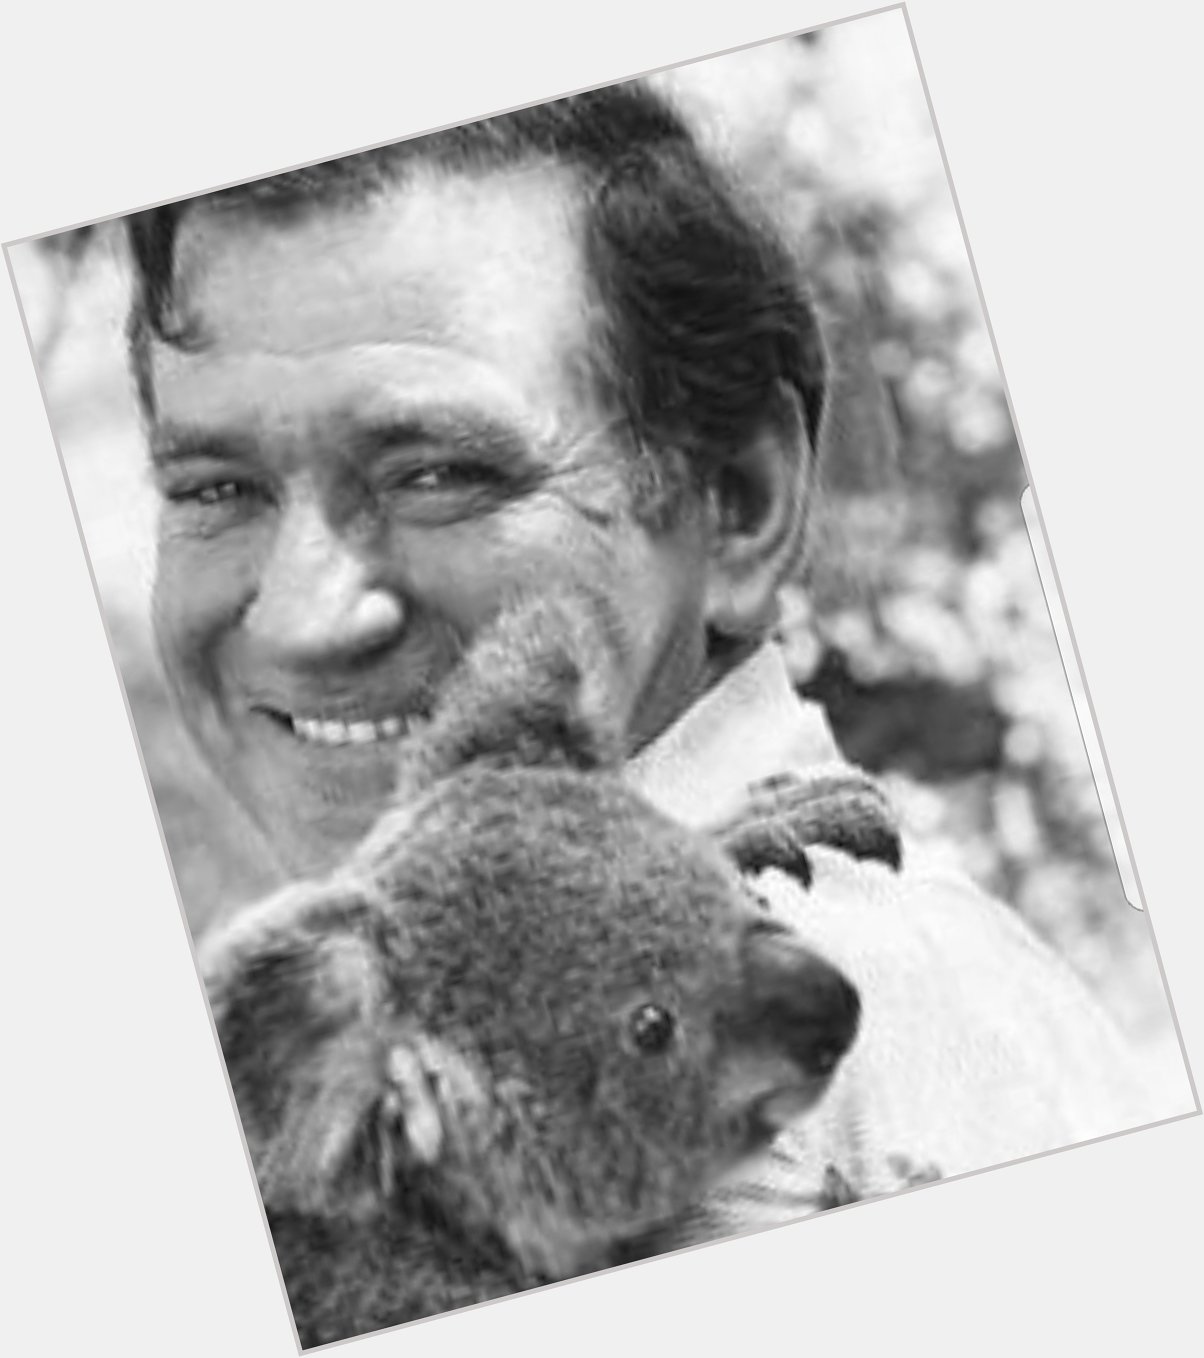 Happy birthday Rod Taylor, you saucy koala snuggler. 